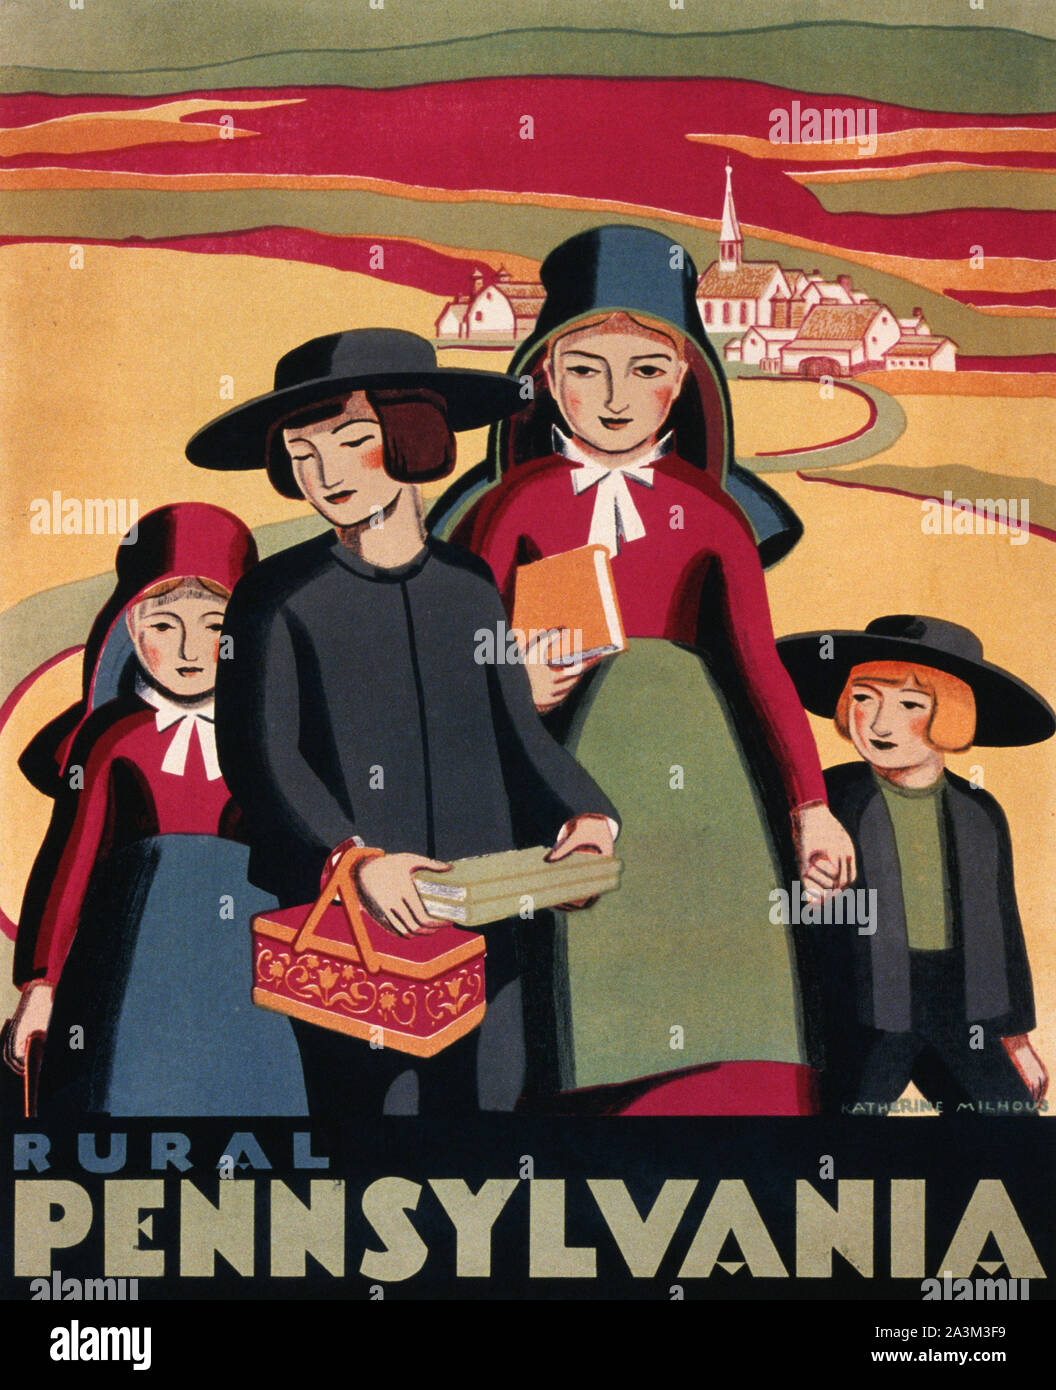 Rural Pennsylvania - Work Progress Administration - Federal Art Project -  Vintage poster 1938 Stock Photo